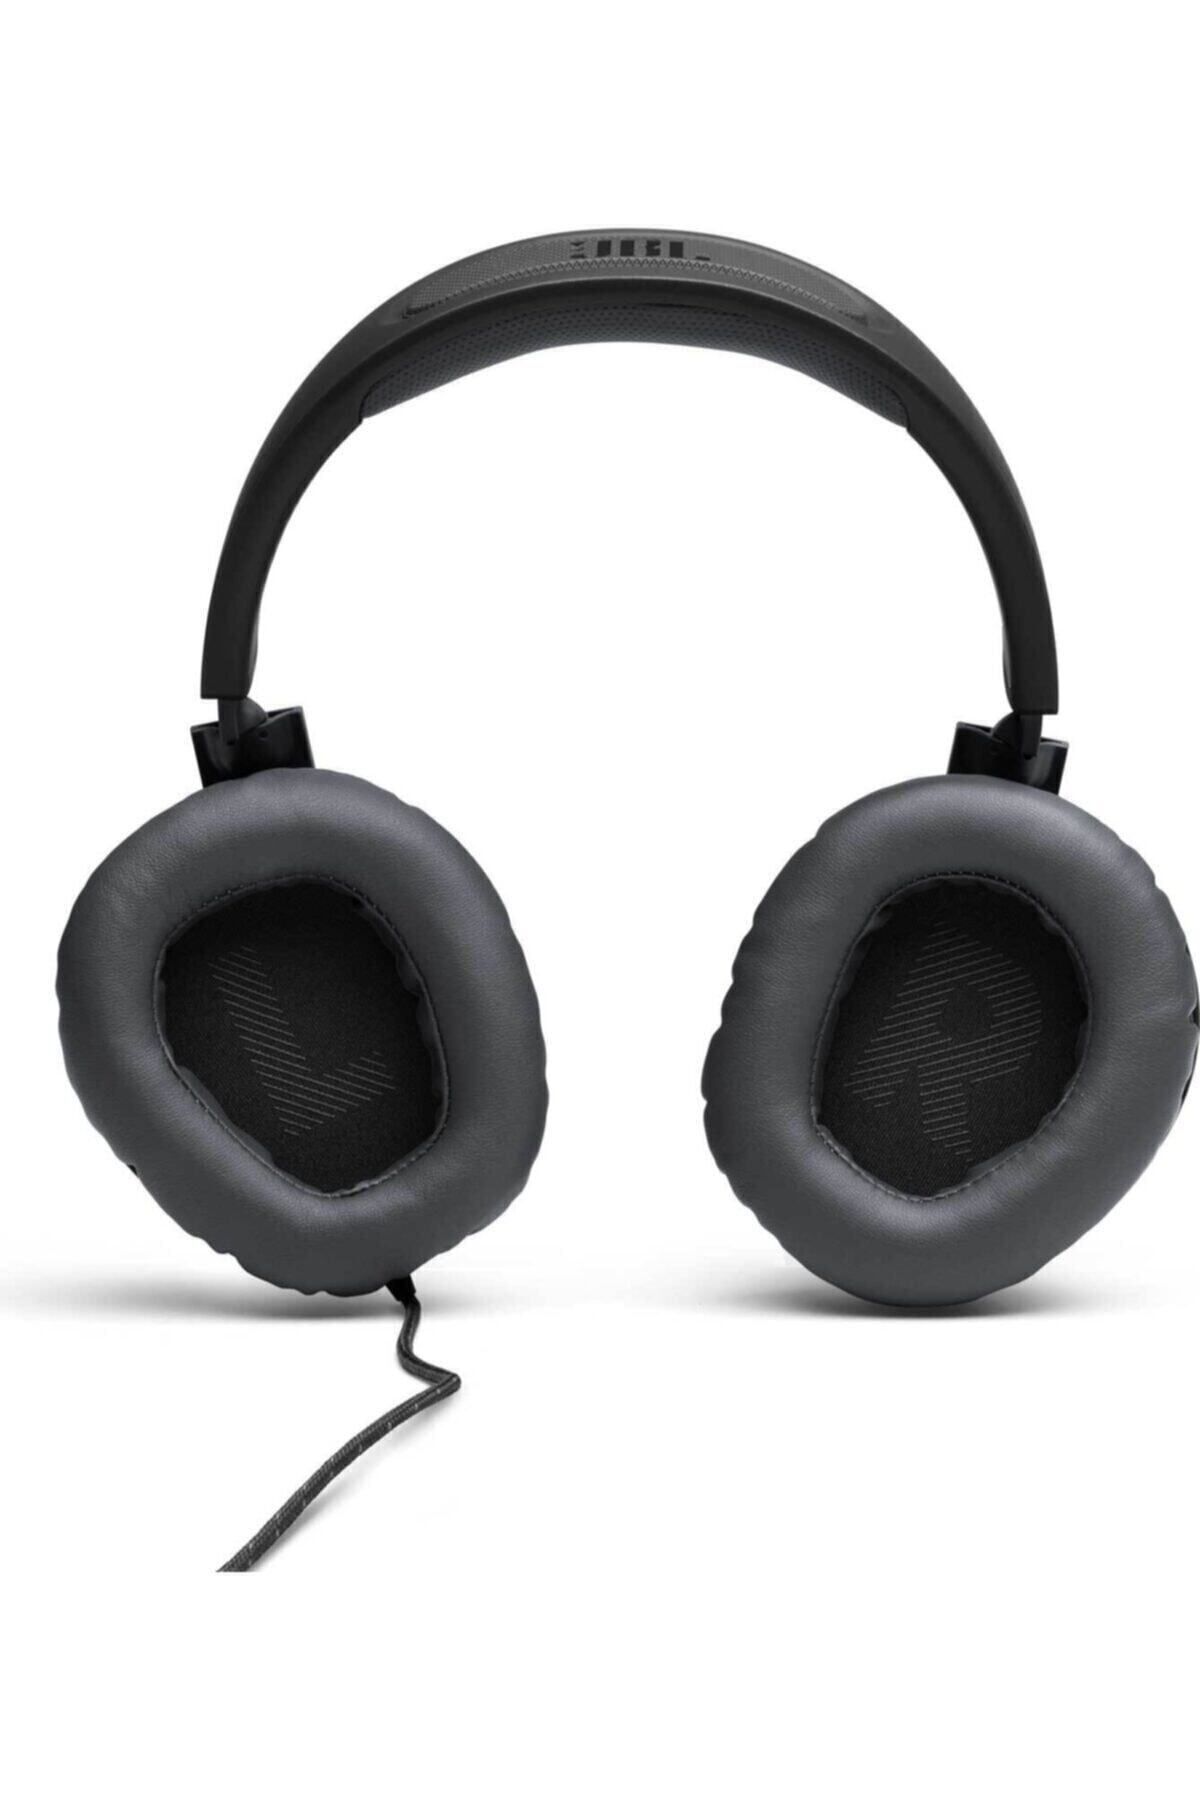 JBL Quantum 100 Gaming Kulaklık Kablolu Siyah Kulak Üstü Mikrofonlu 3.5 mm